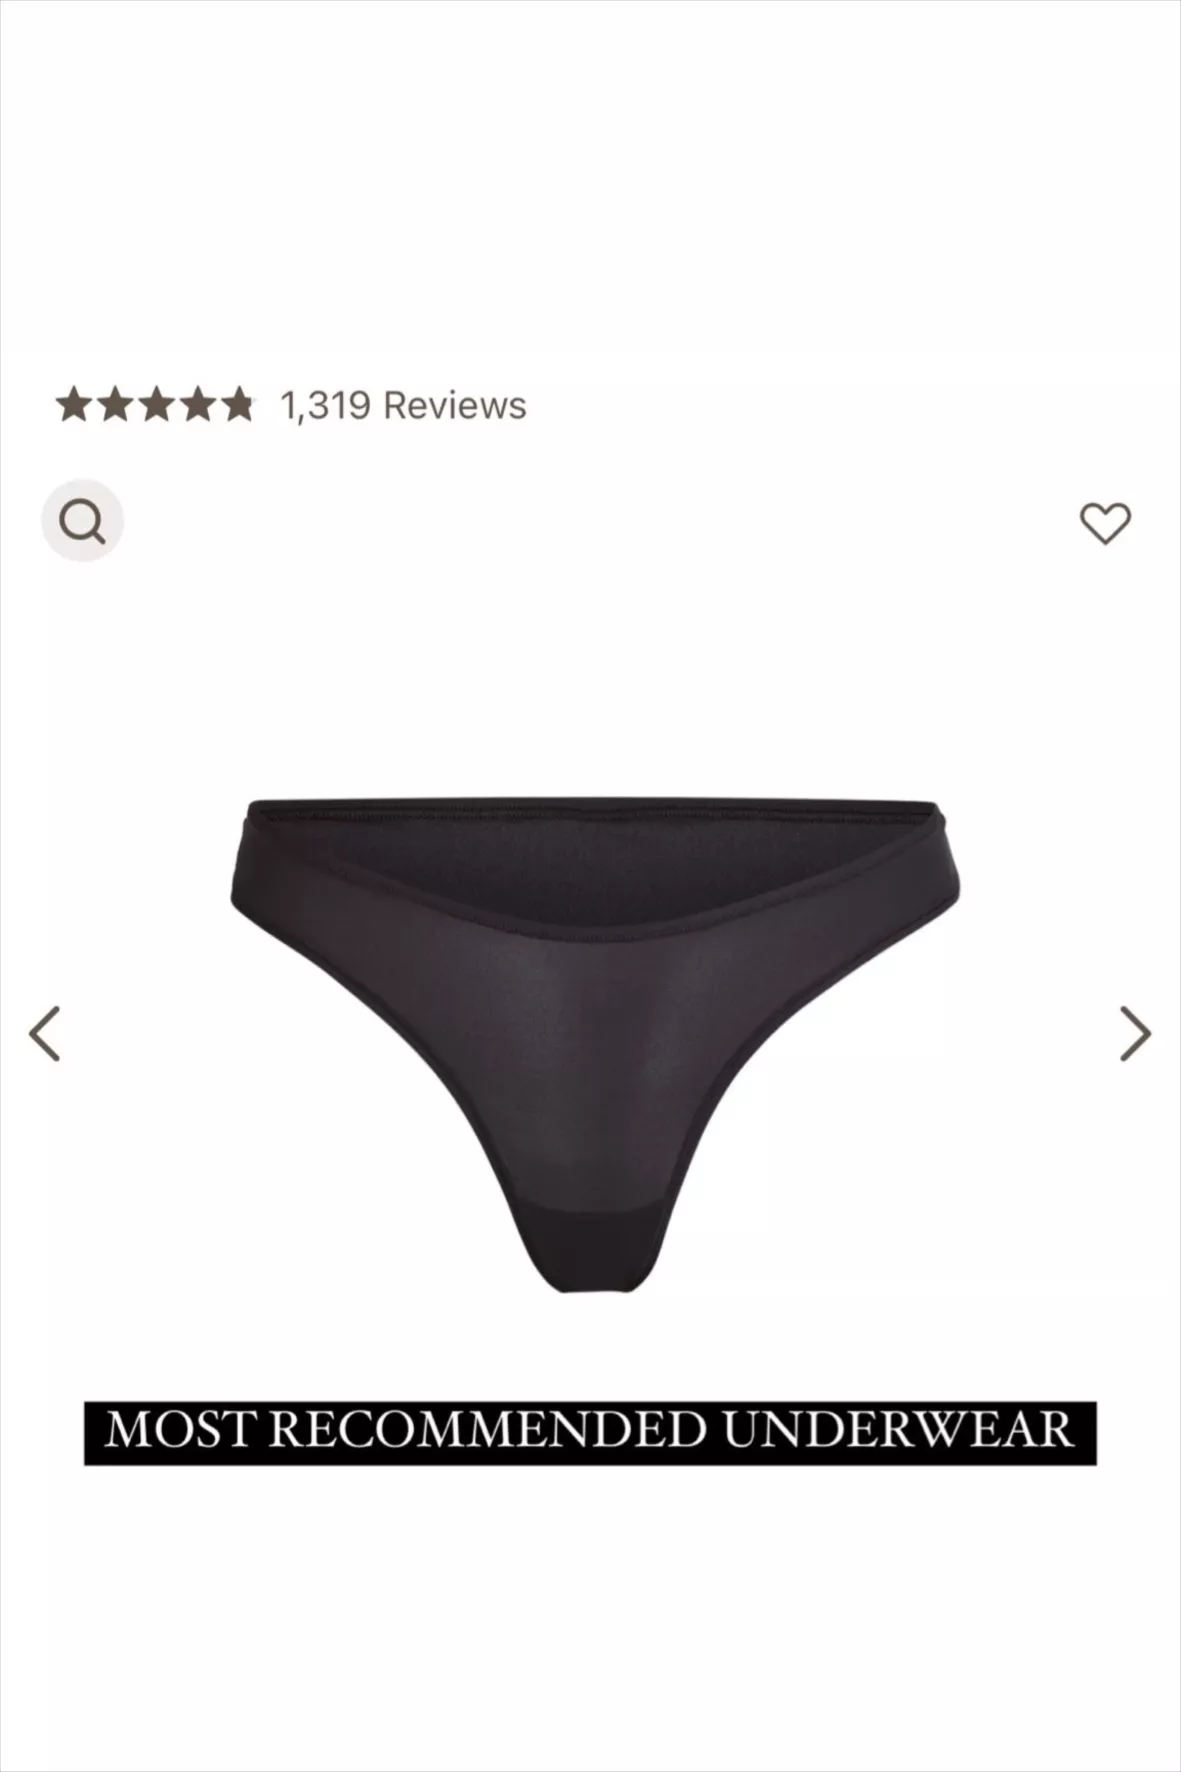 Underwear Models try on underwear! 